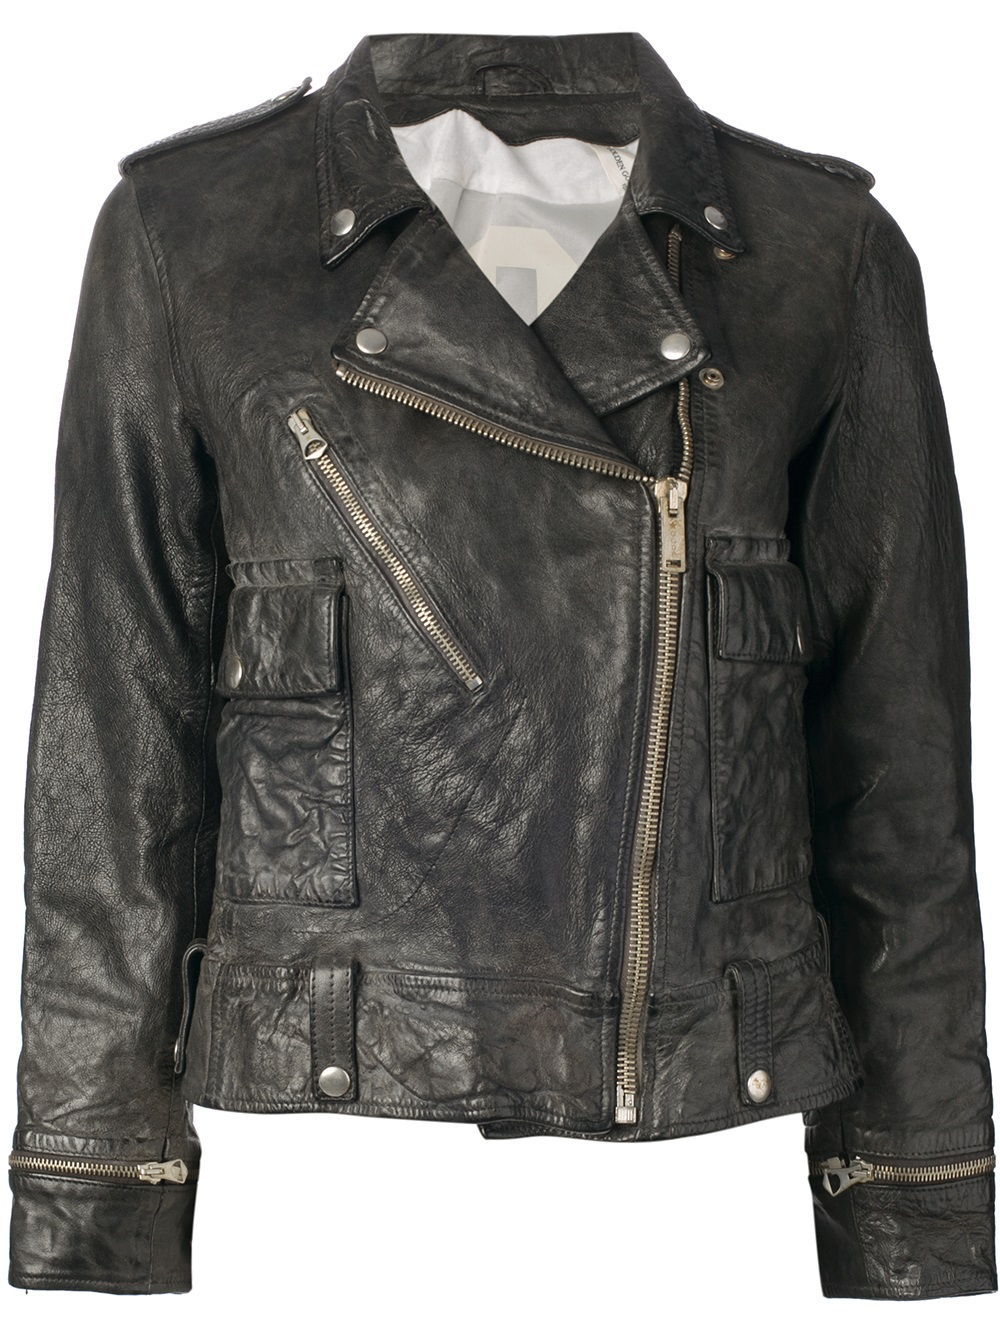 Golden Goose Deluxe Brand Distressed Leather Biker Jacket in Black - Lyst